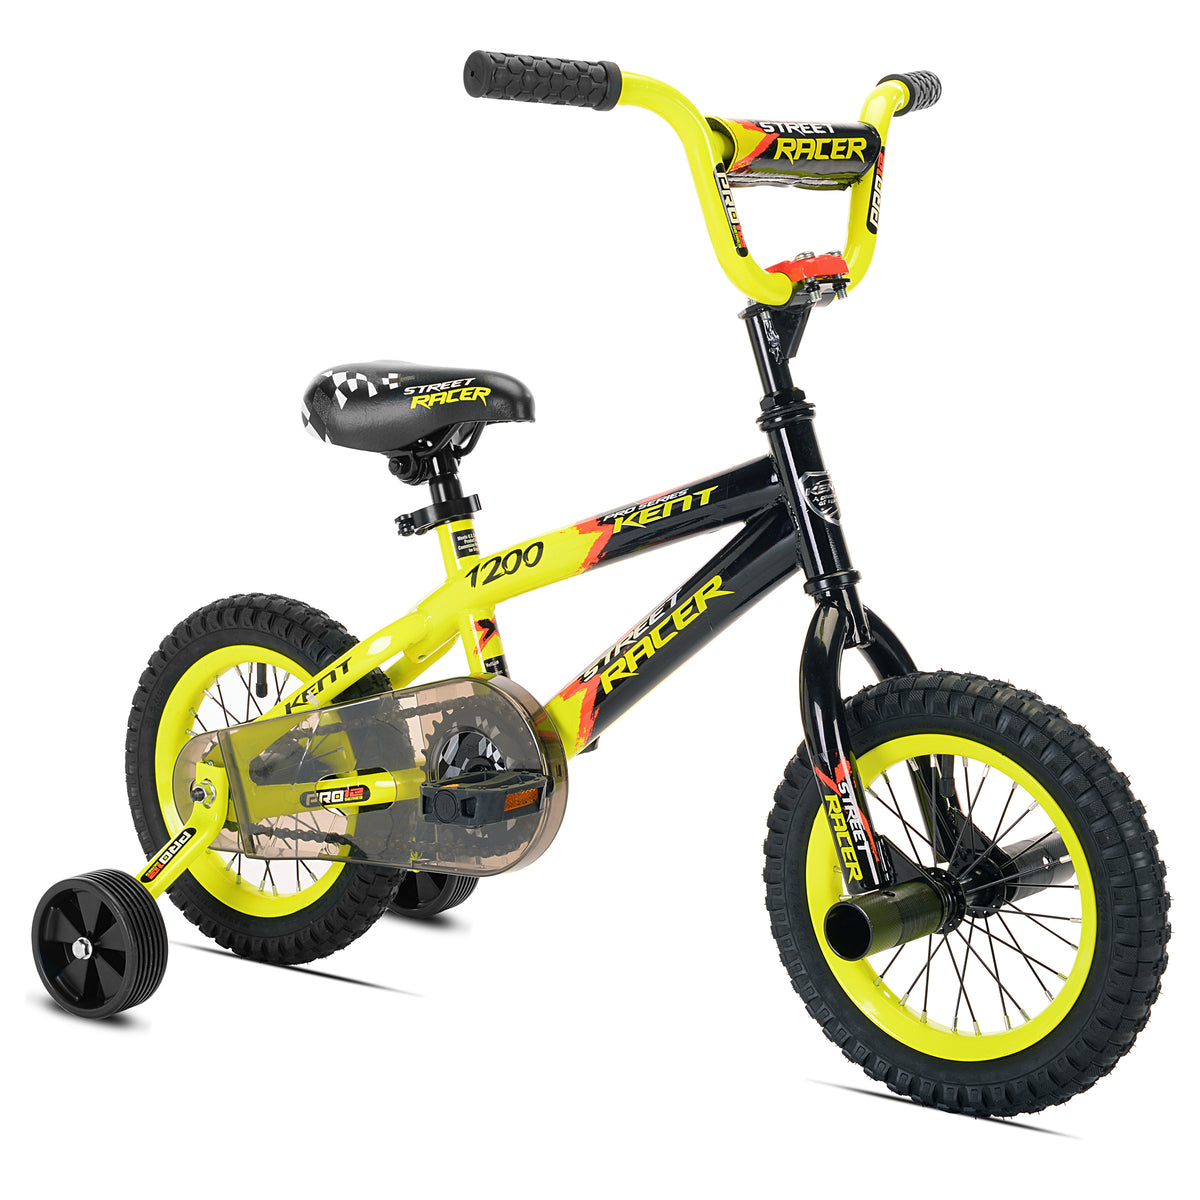 12" Kent Street Racer | BMX Bike for Kids Ages 2-4